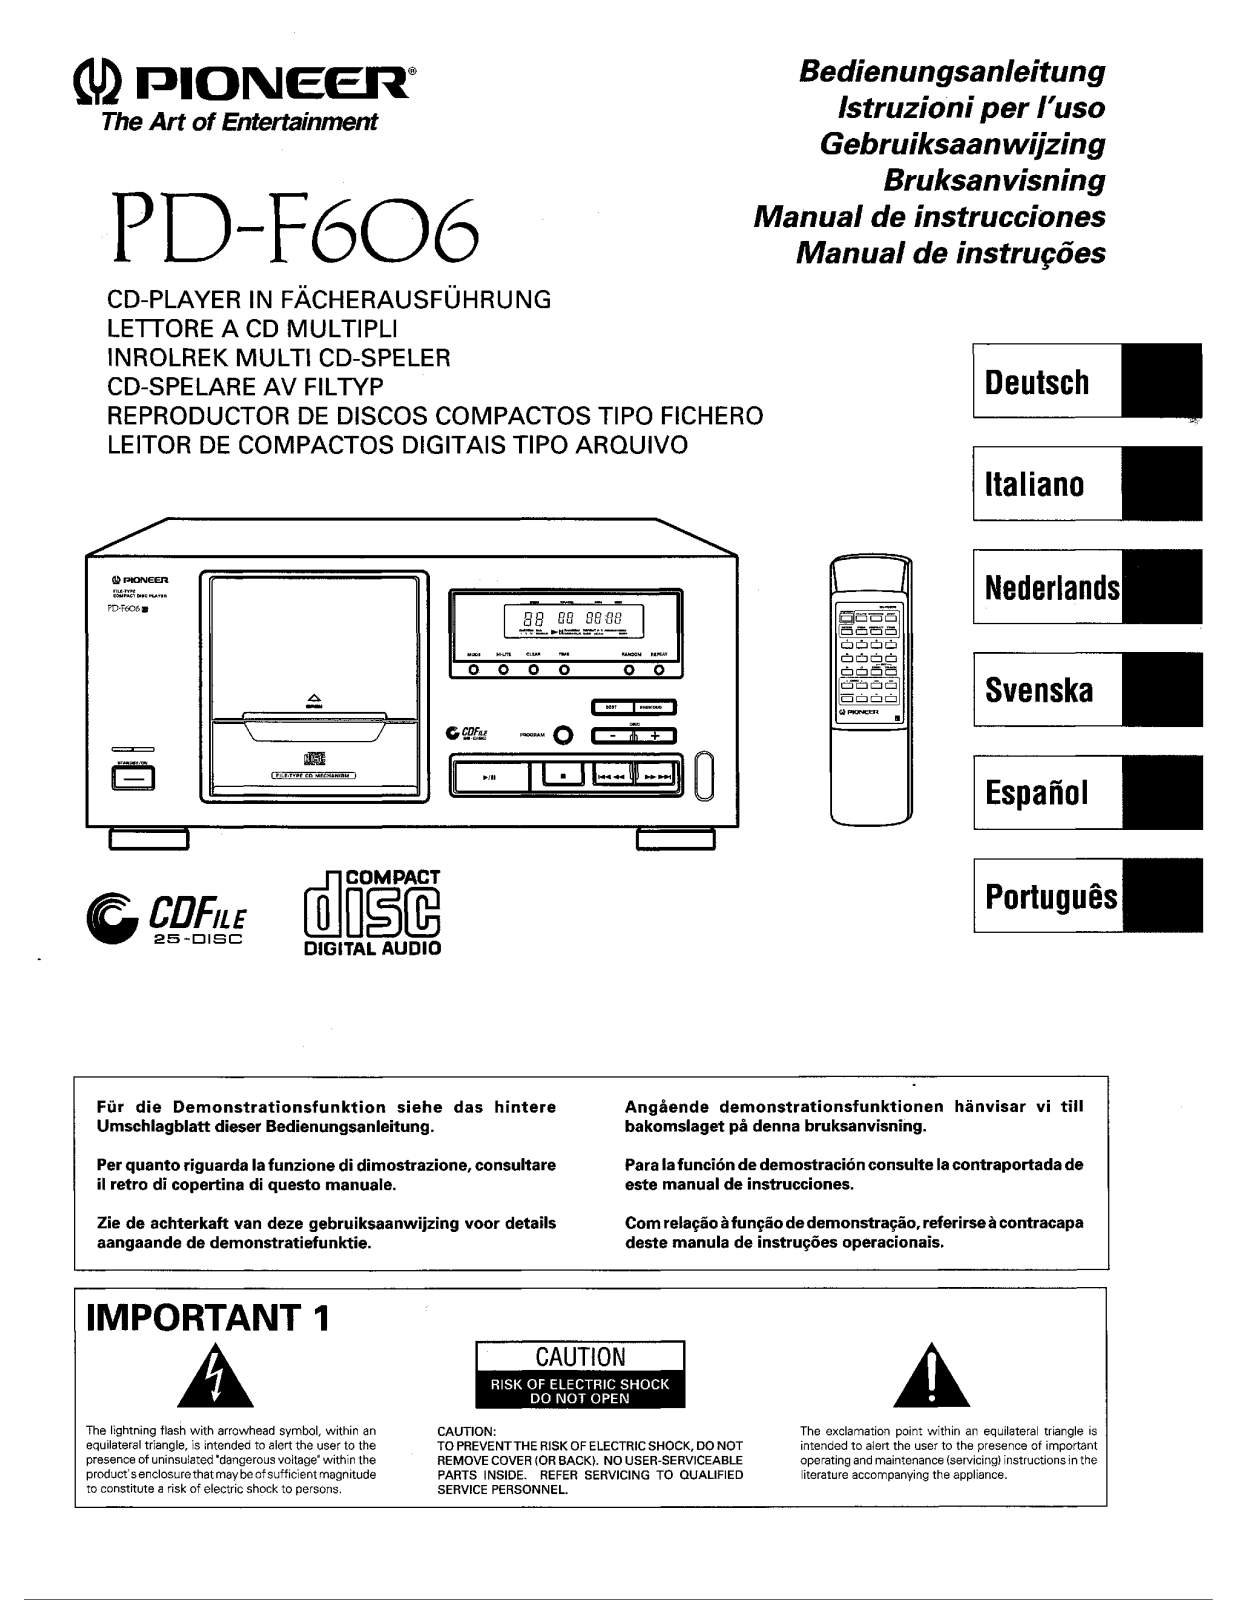 Pioneer PD-F606 Manual